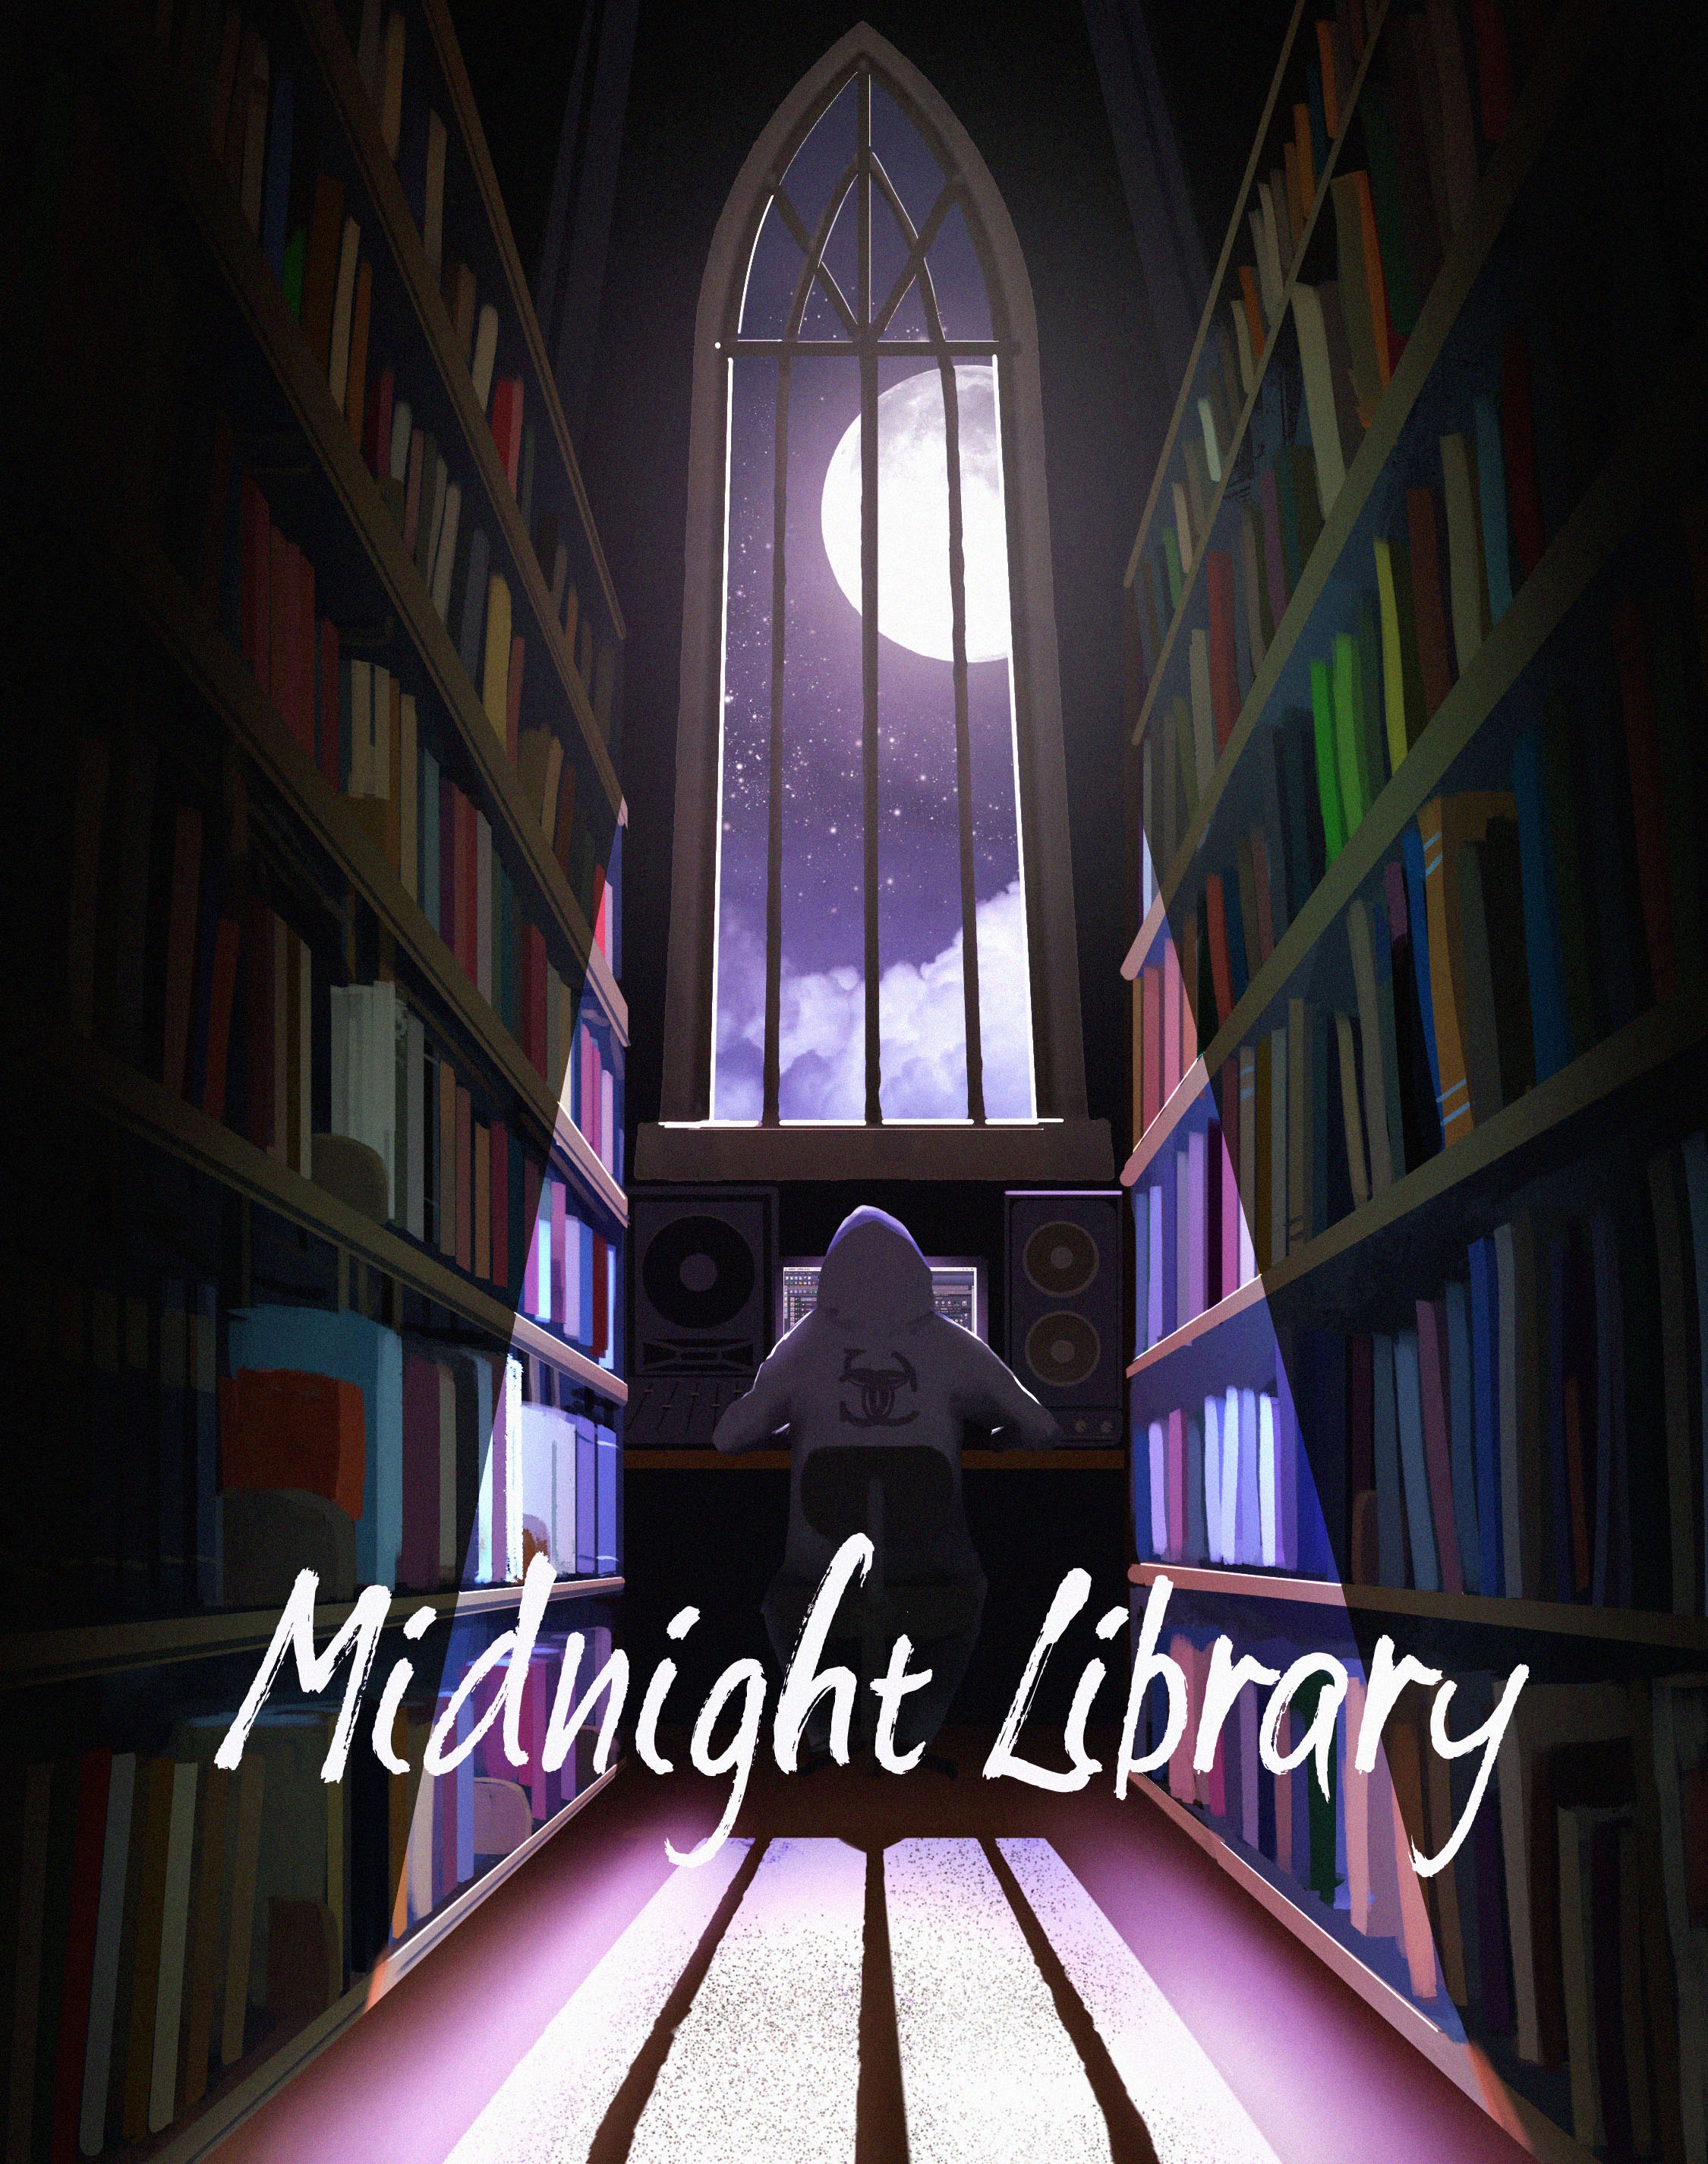 MC David J - Midnight Library